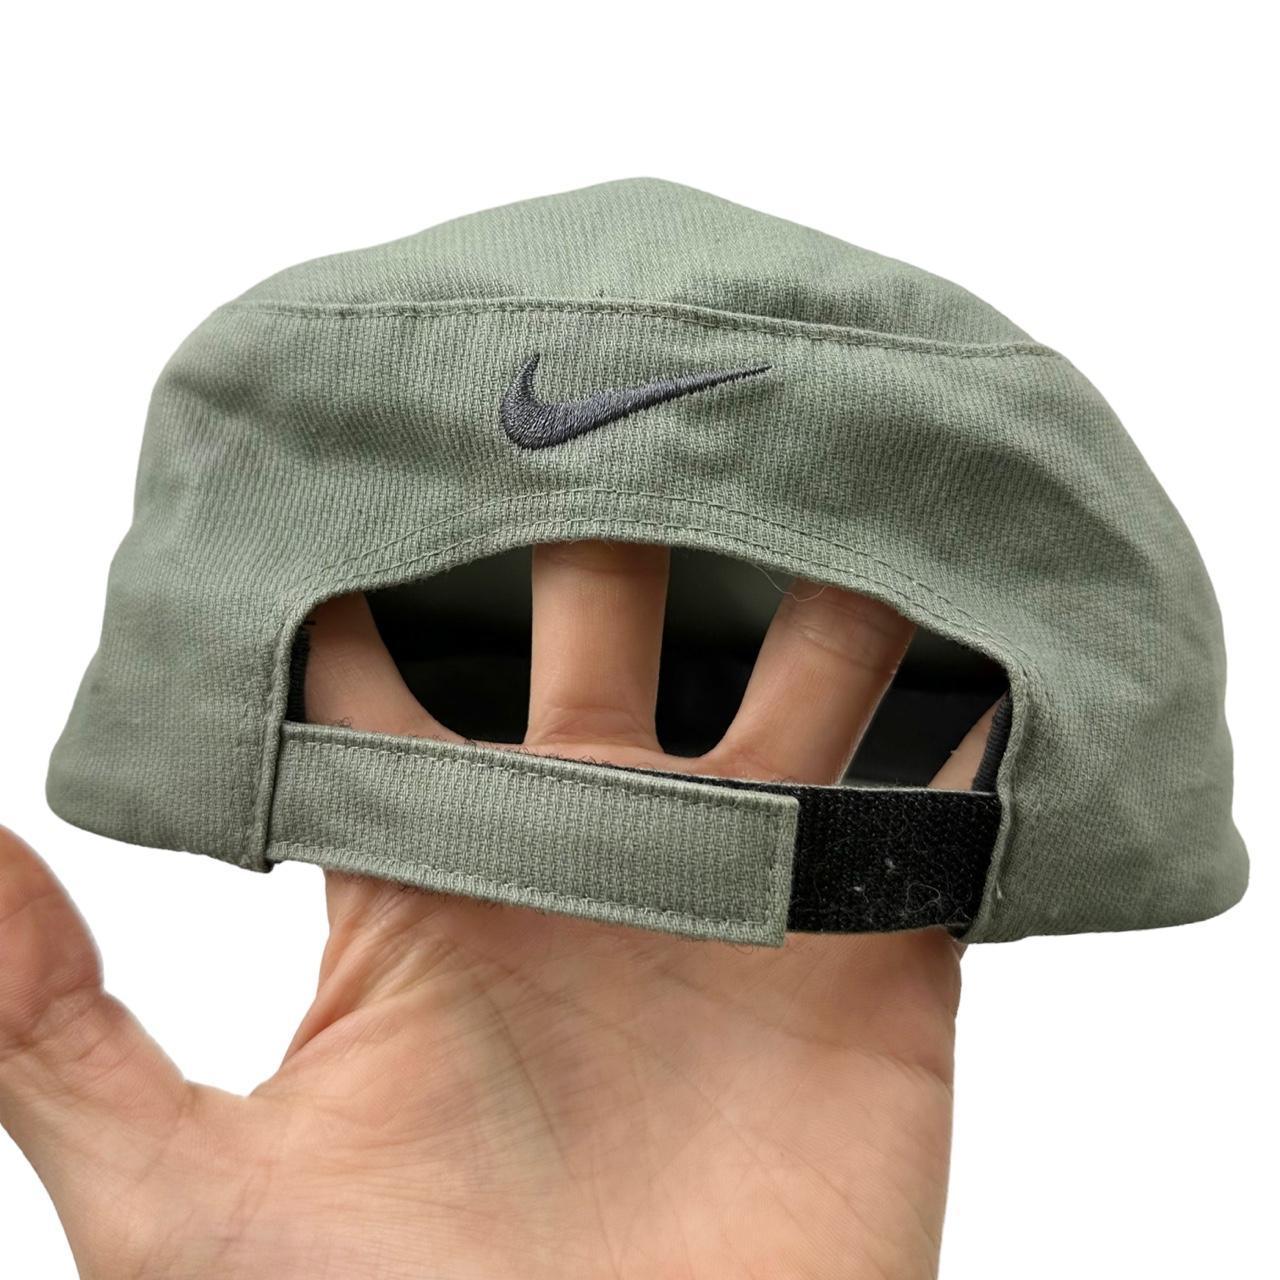 Vintage Nike Advanced Innovation Team Hat - Known Source